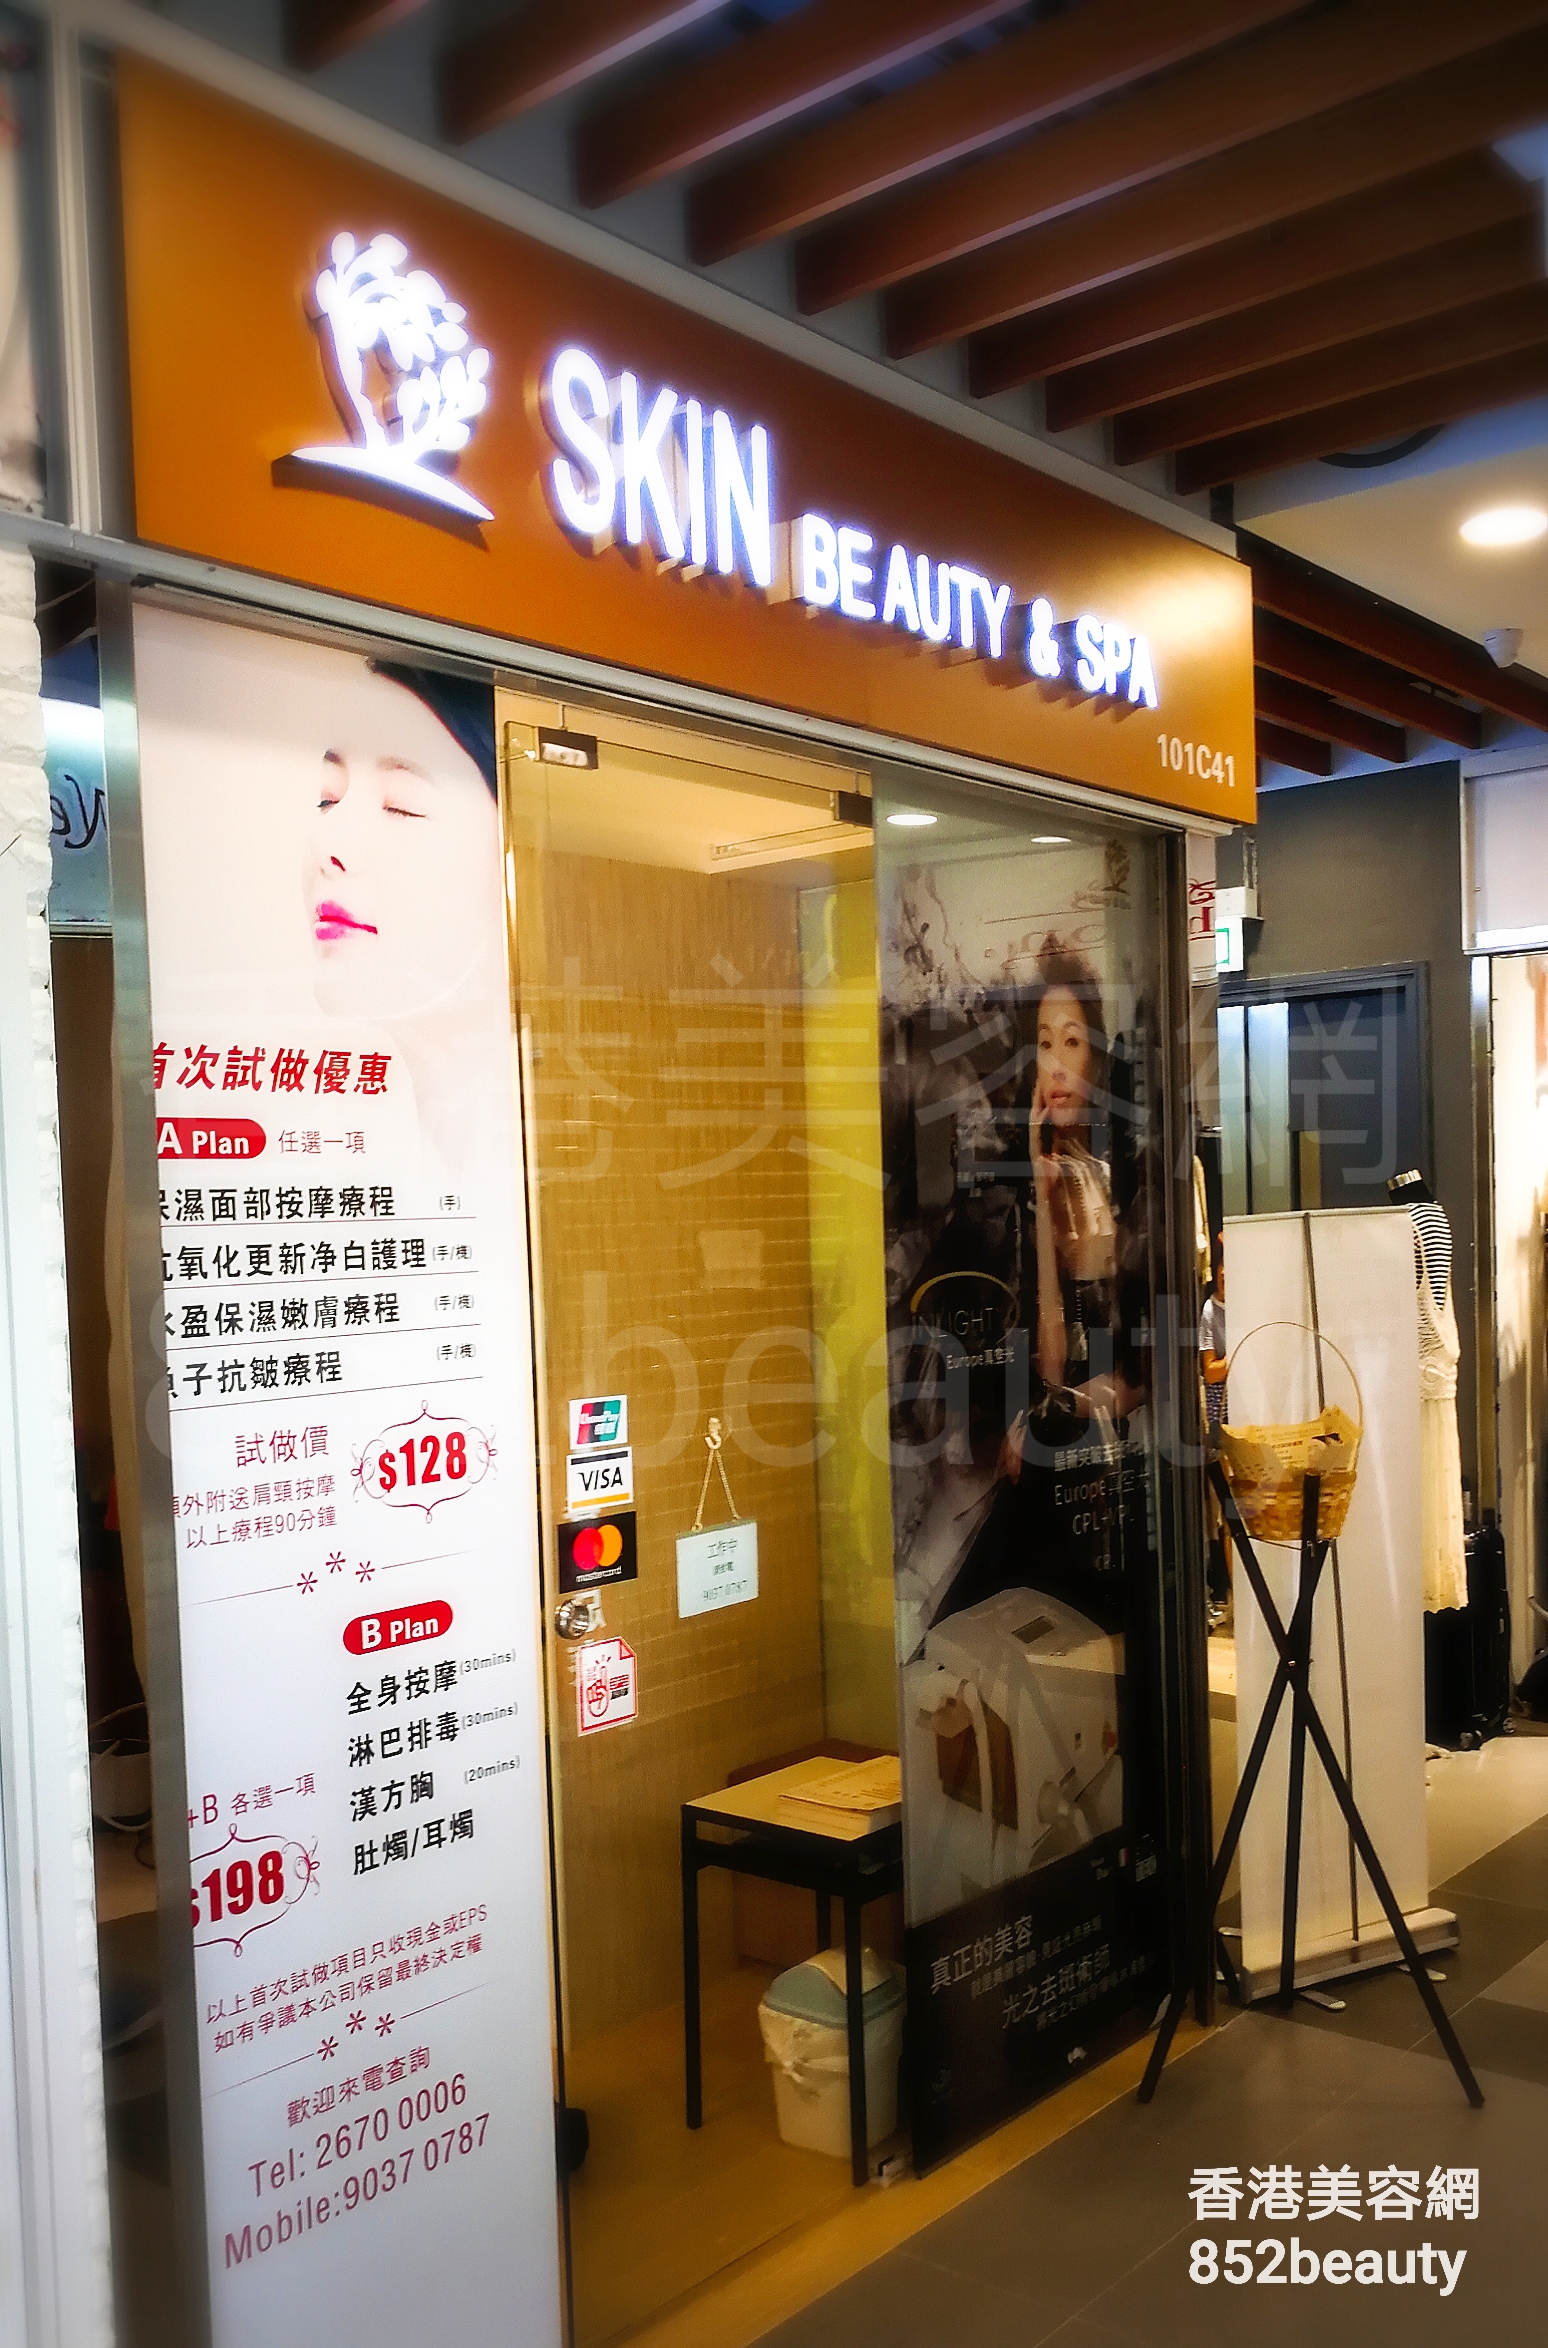 美容院 Beauty Salon: SKIN BEAUTY & SPA